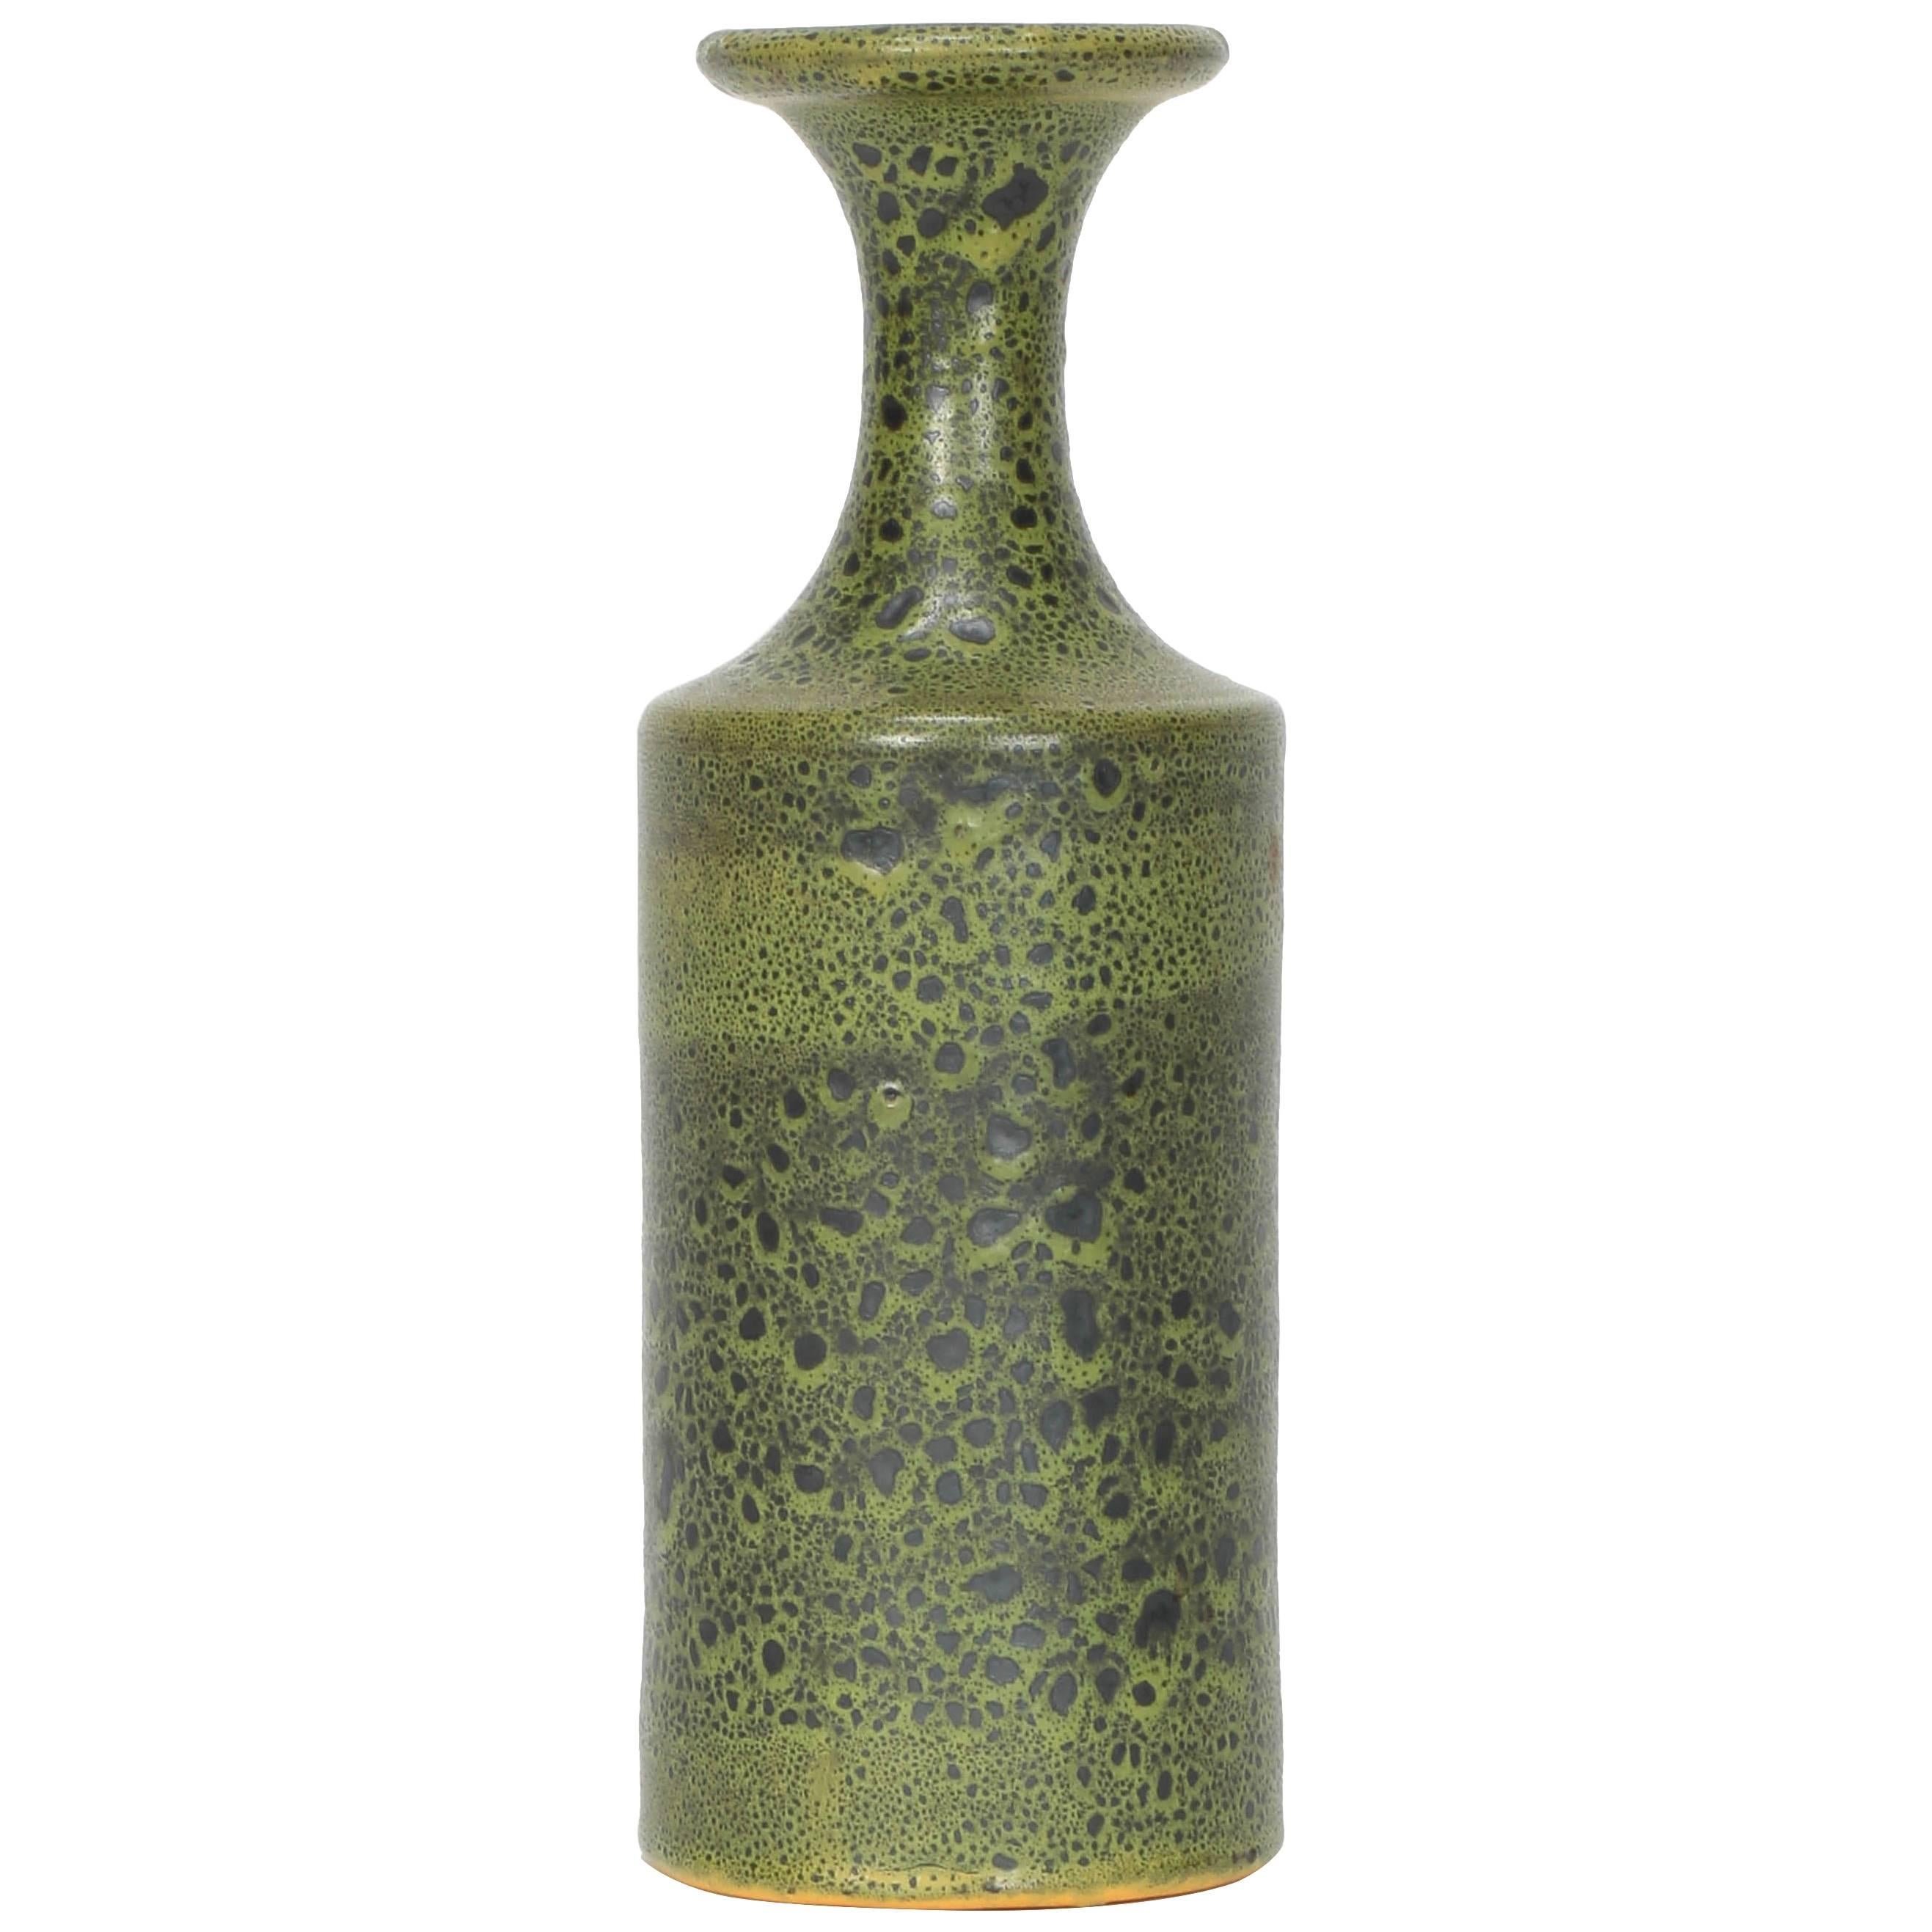 André Freymond Signed Ceramic Vase in Yellow and Green Glaze, 1950s